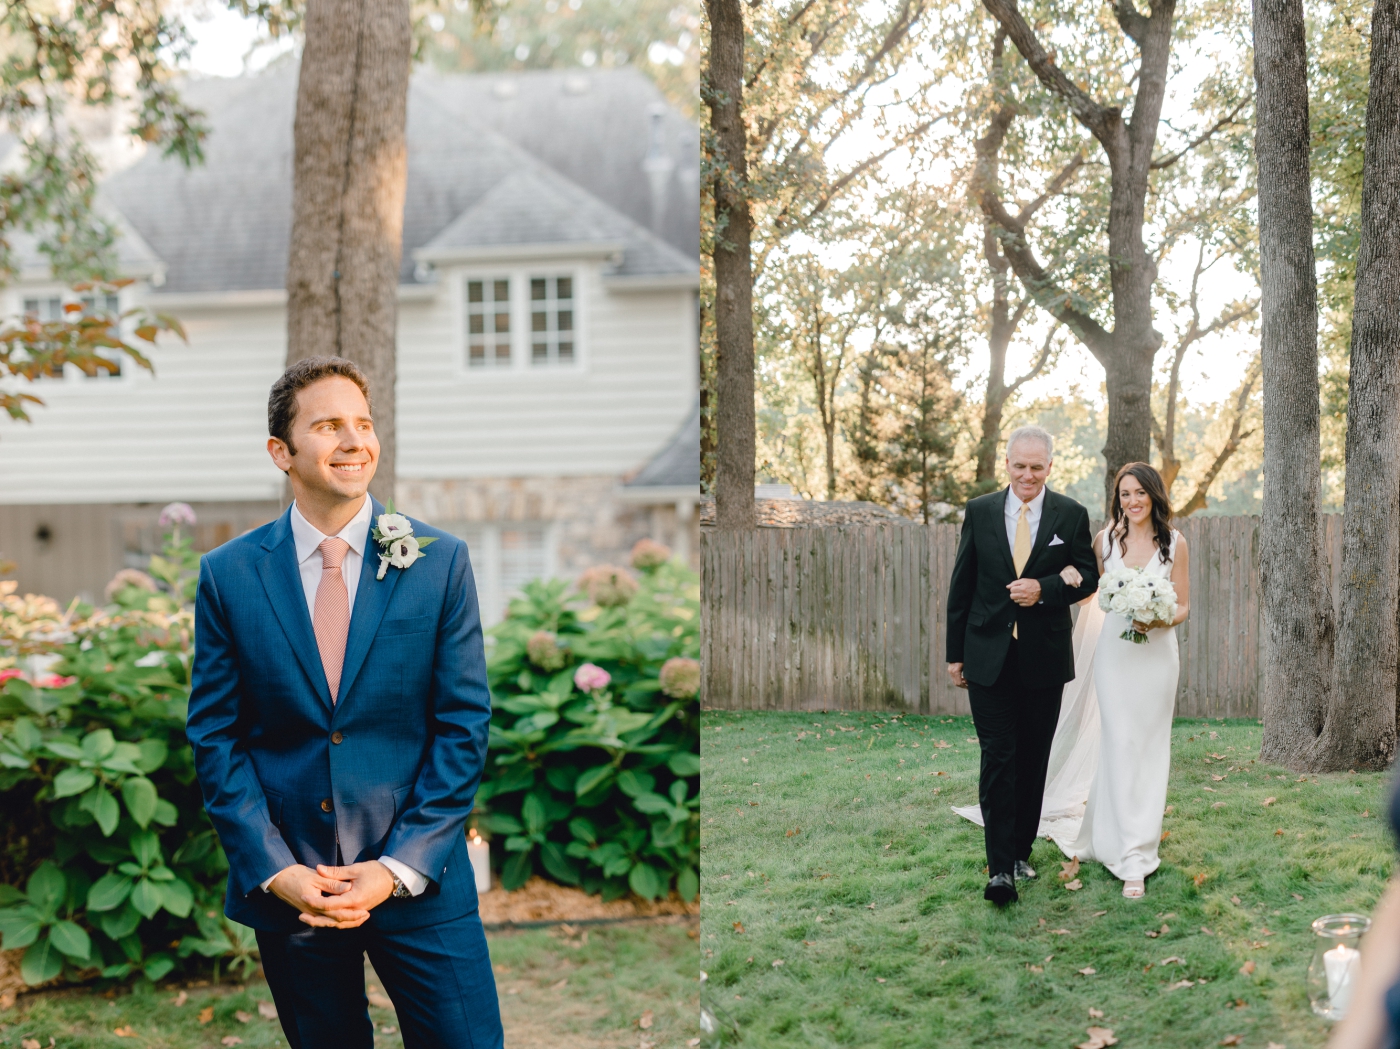 Elegant and classic white and gold backyard wedding